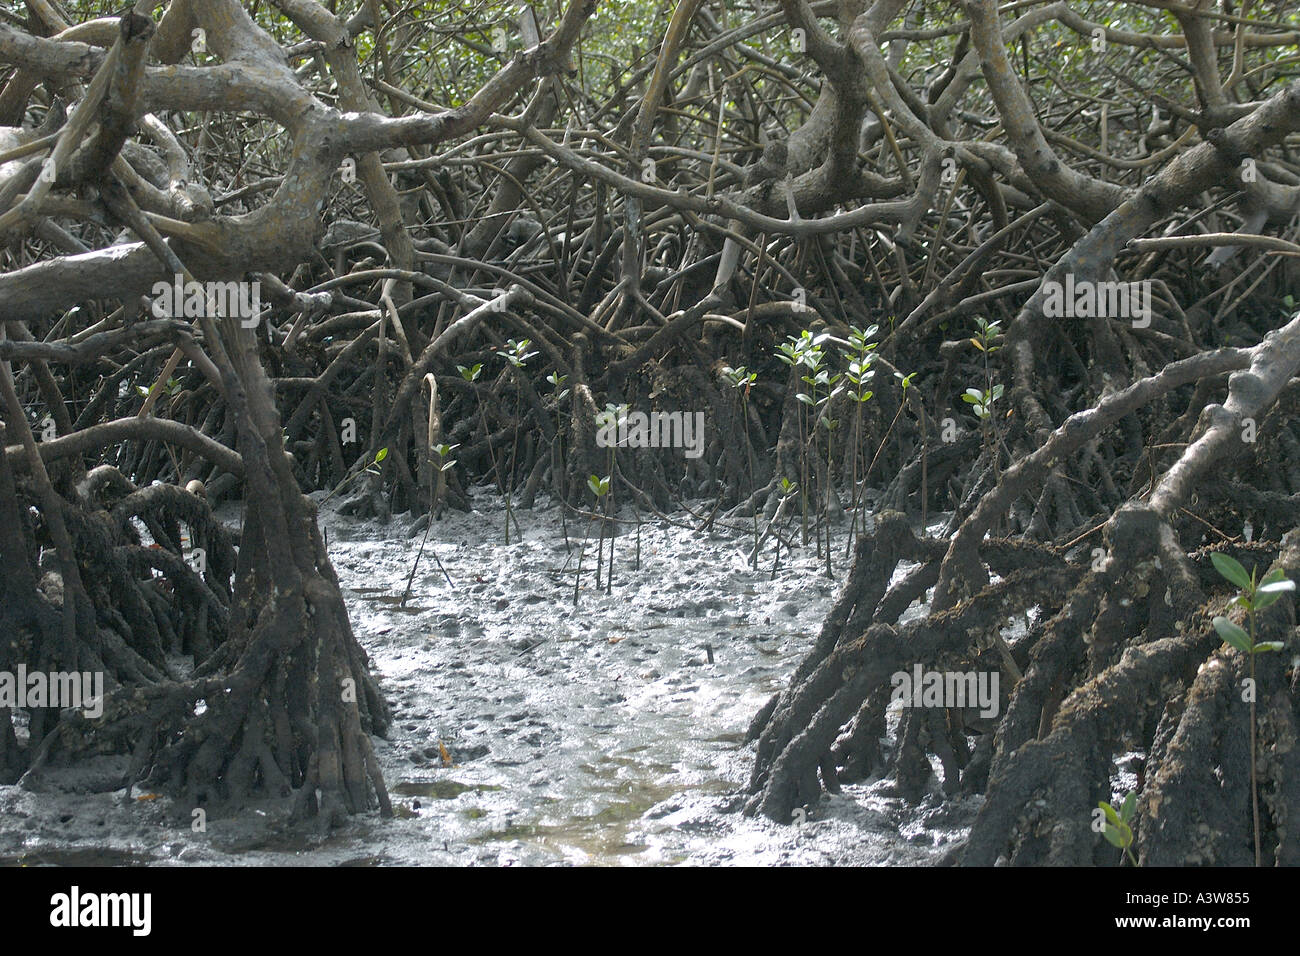 Mangrove a threatened ecosystem struggling to survive Caixa Prego Bahia Brazil Stock Photo